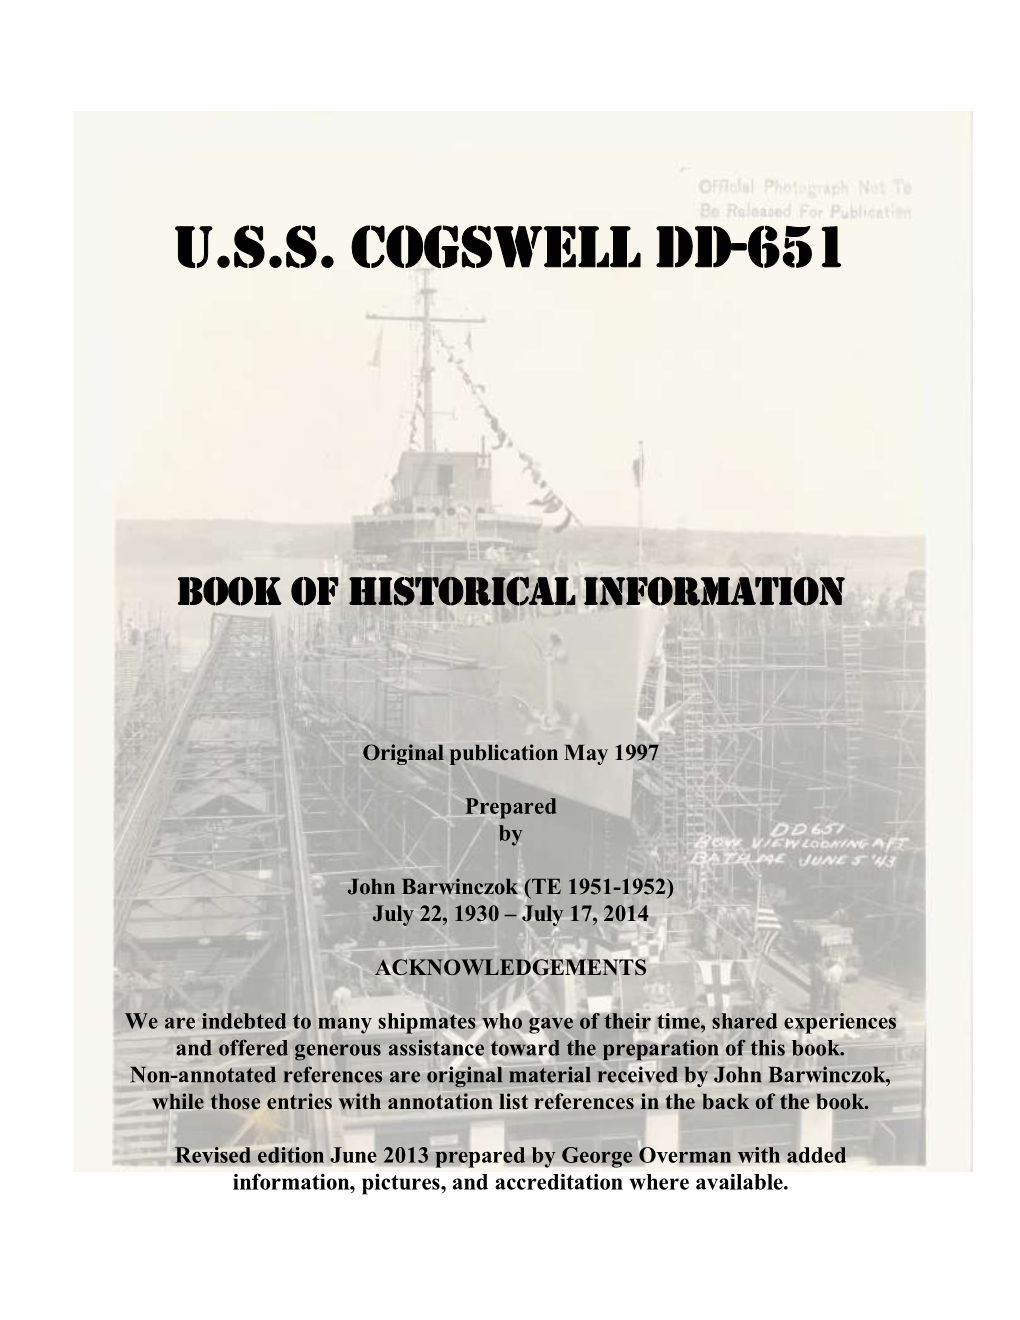 Uss Cogswell Dd-651 Association